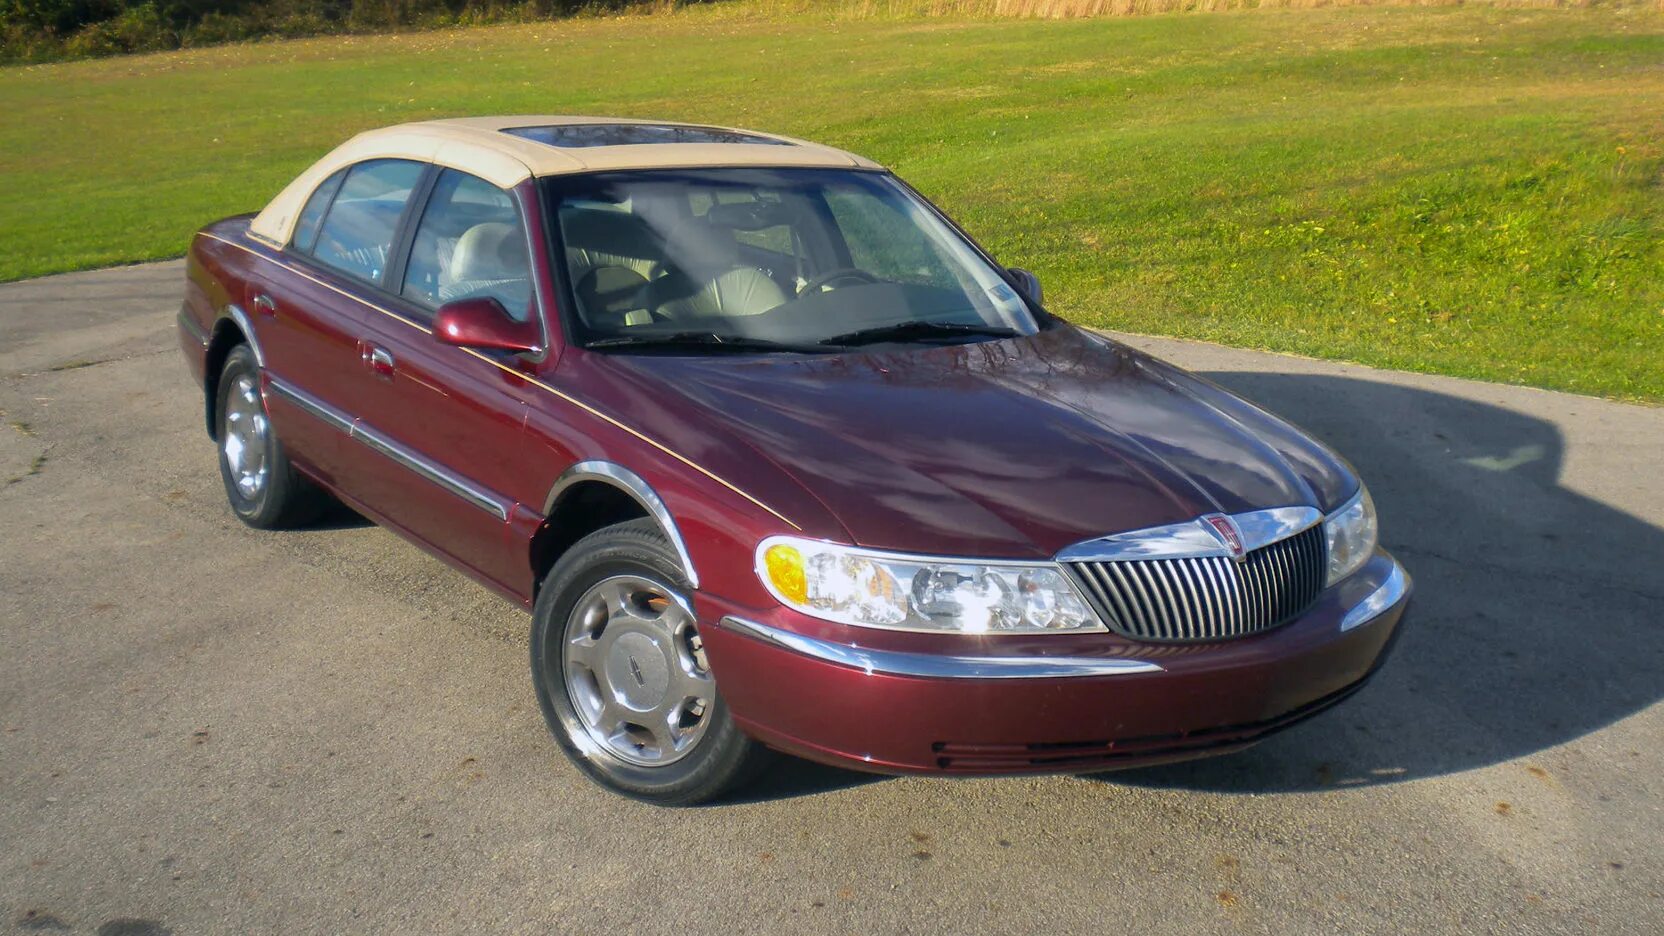 Lincoln 2000. Lincoln седан 2000. Lincoln Continental 2000. Линкольн 2000 года. Как называют 2000 год